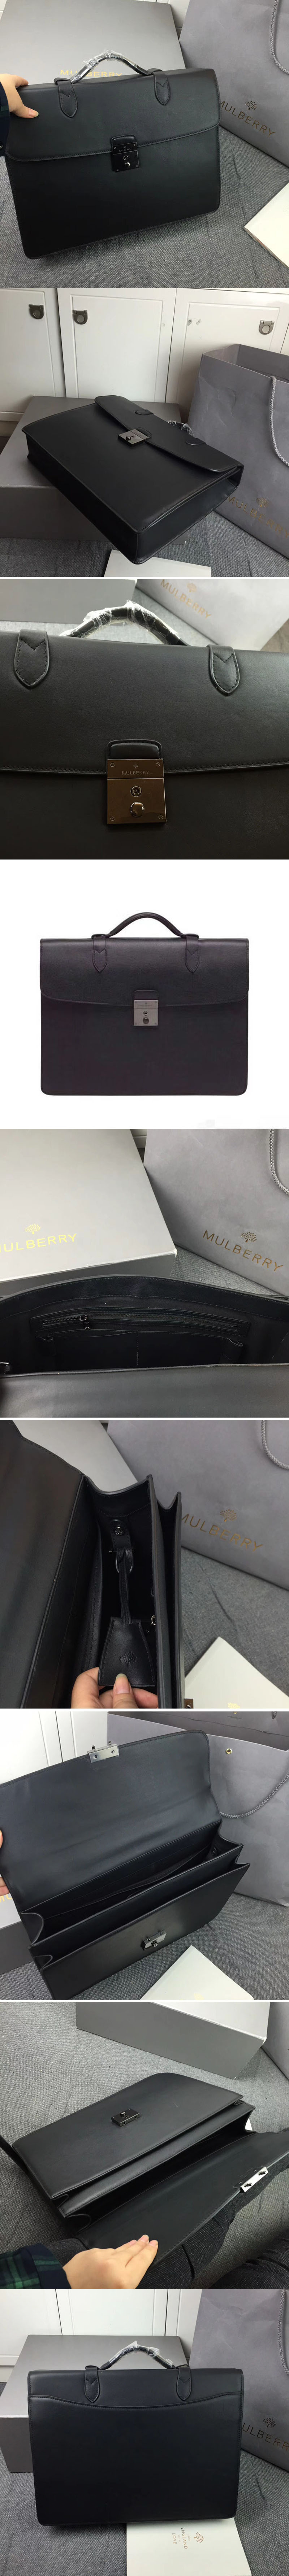 Replica Mulberry Bags